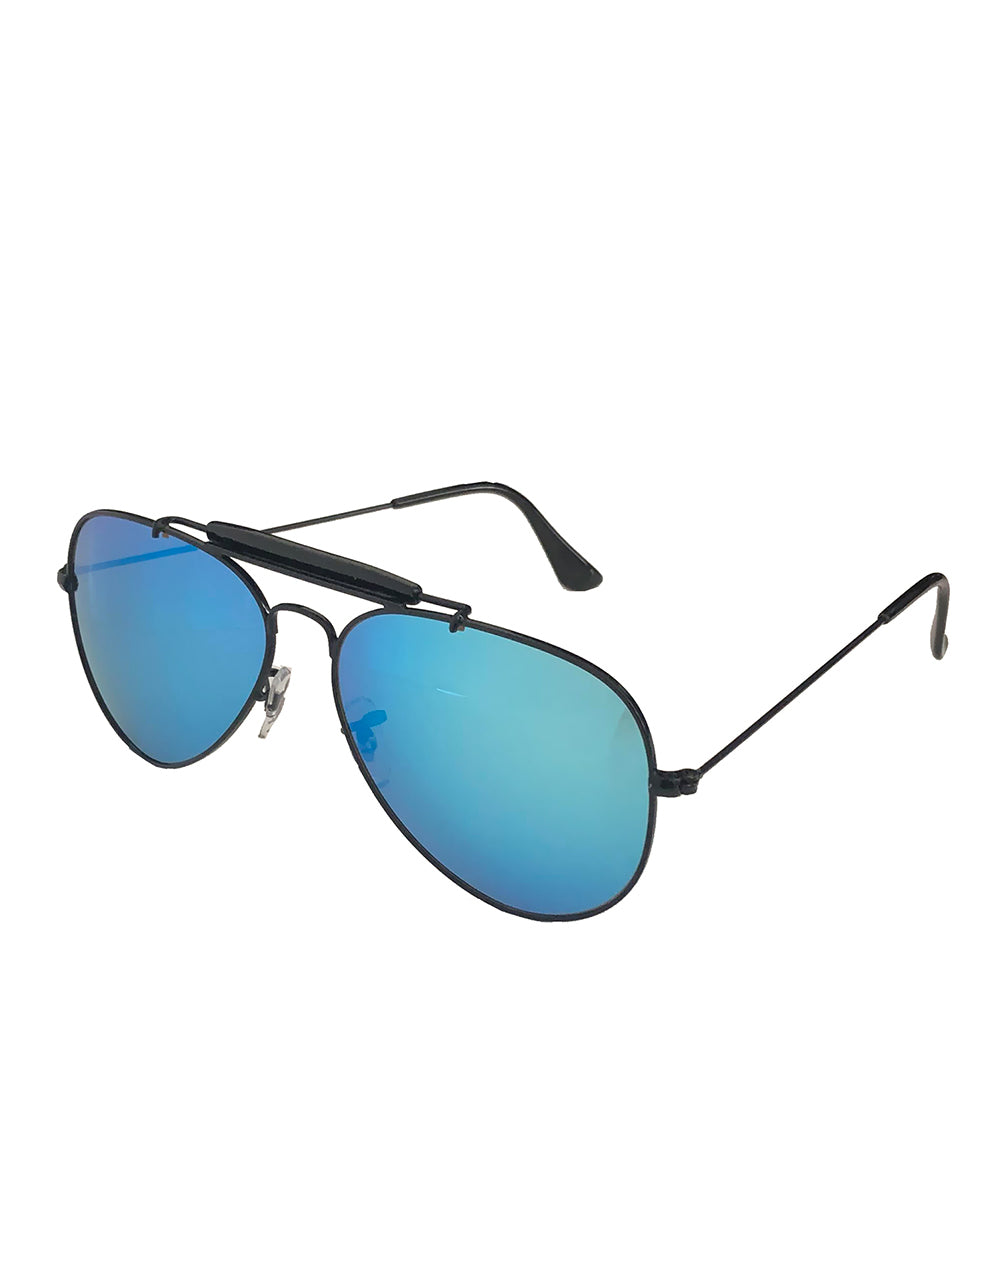 Cobra Style Aviator Sunglasses, Black Frame / Ice Blue Mirror Lens